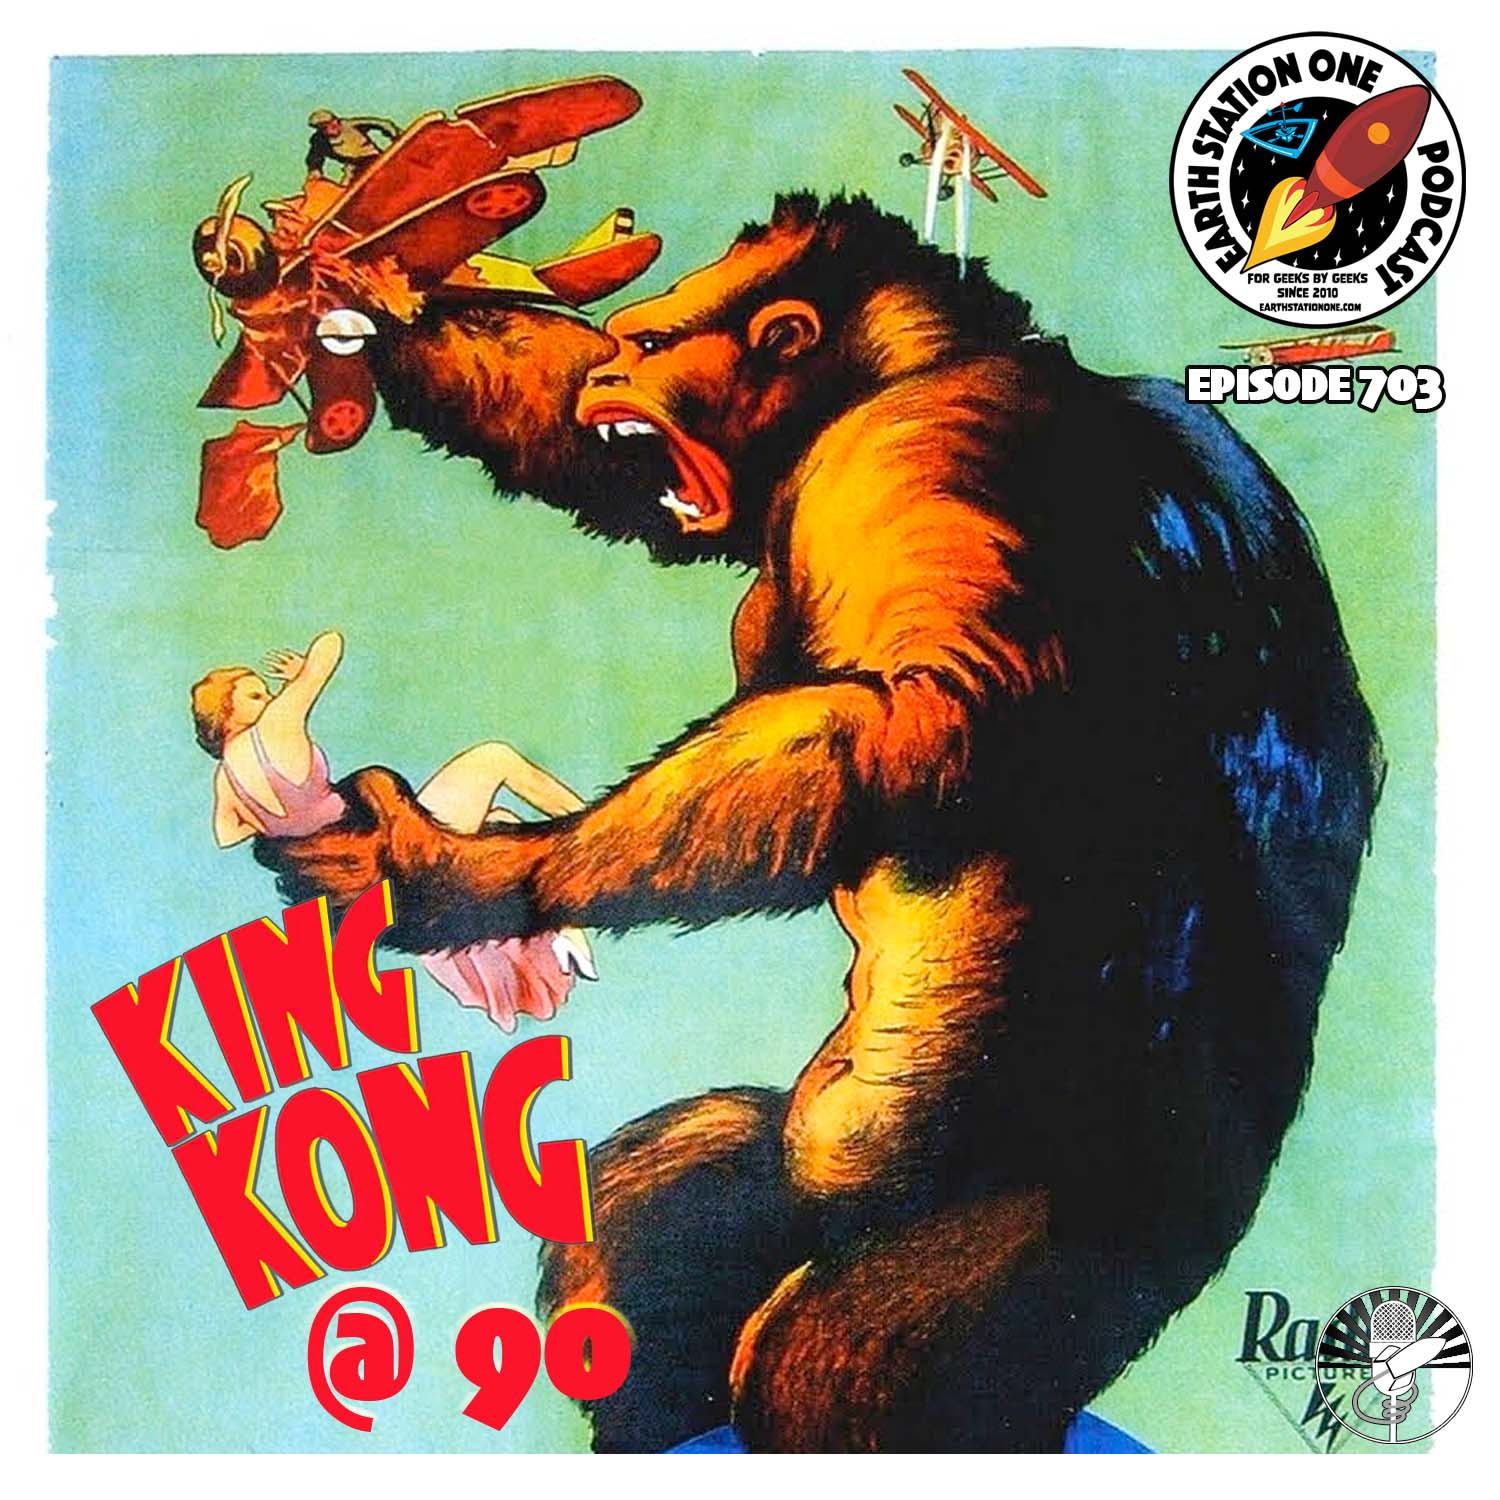 Earth Station One Ep 703 - King Kong @ 90